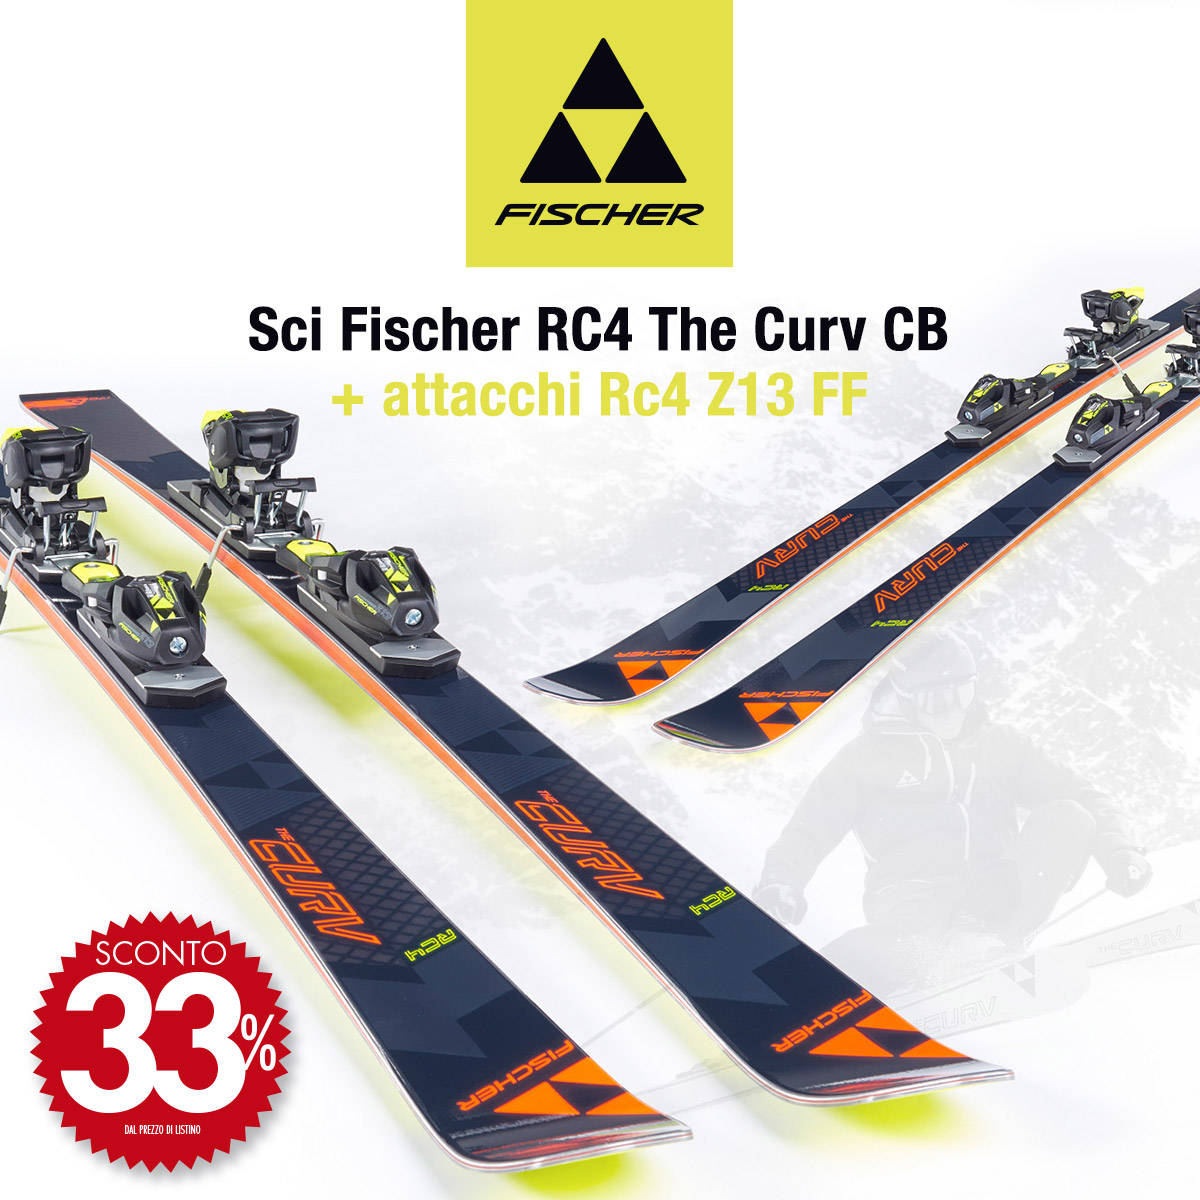 Fischer RC4 The Curv CB: adrenalina pura per sciatori senza compromessi